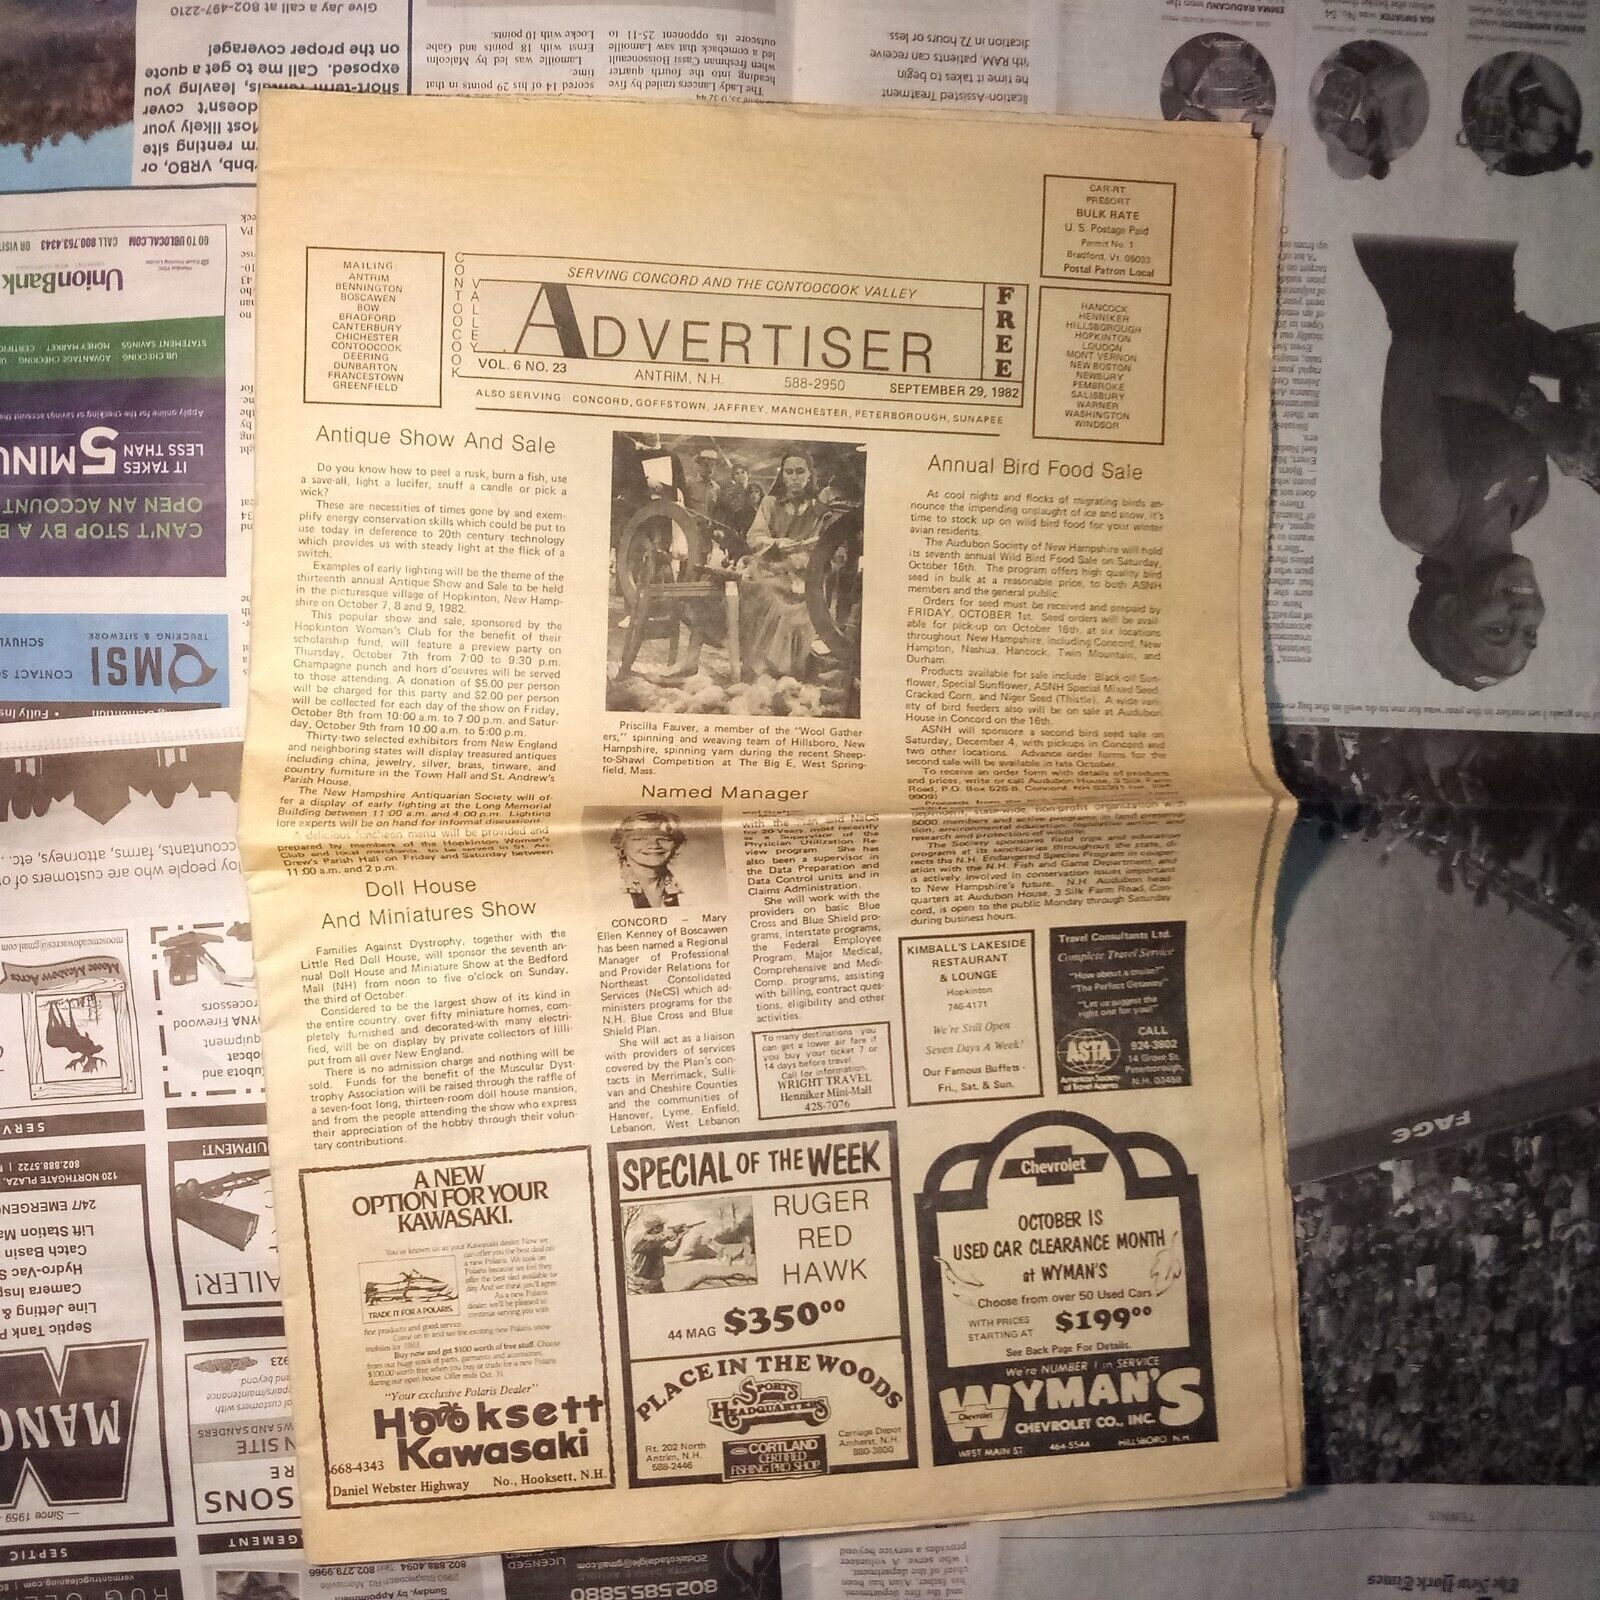 Contoocook Valley Advertiser Antrim NH Sept 29 1982 Newspaper